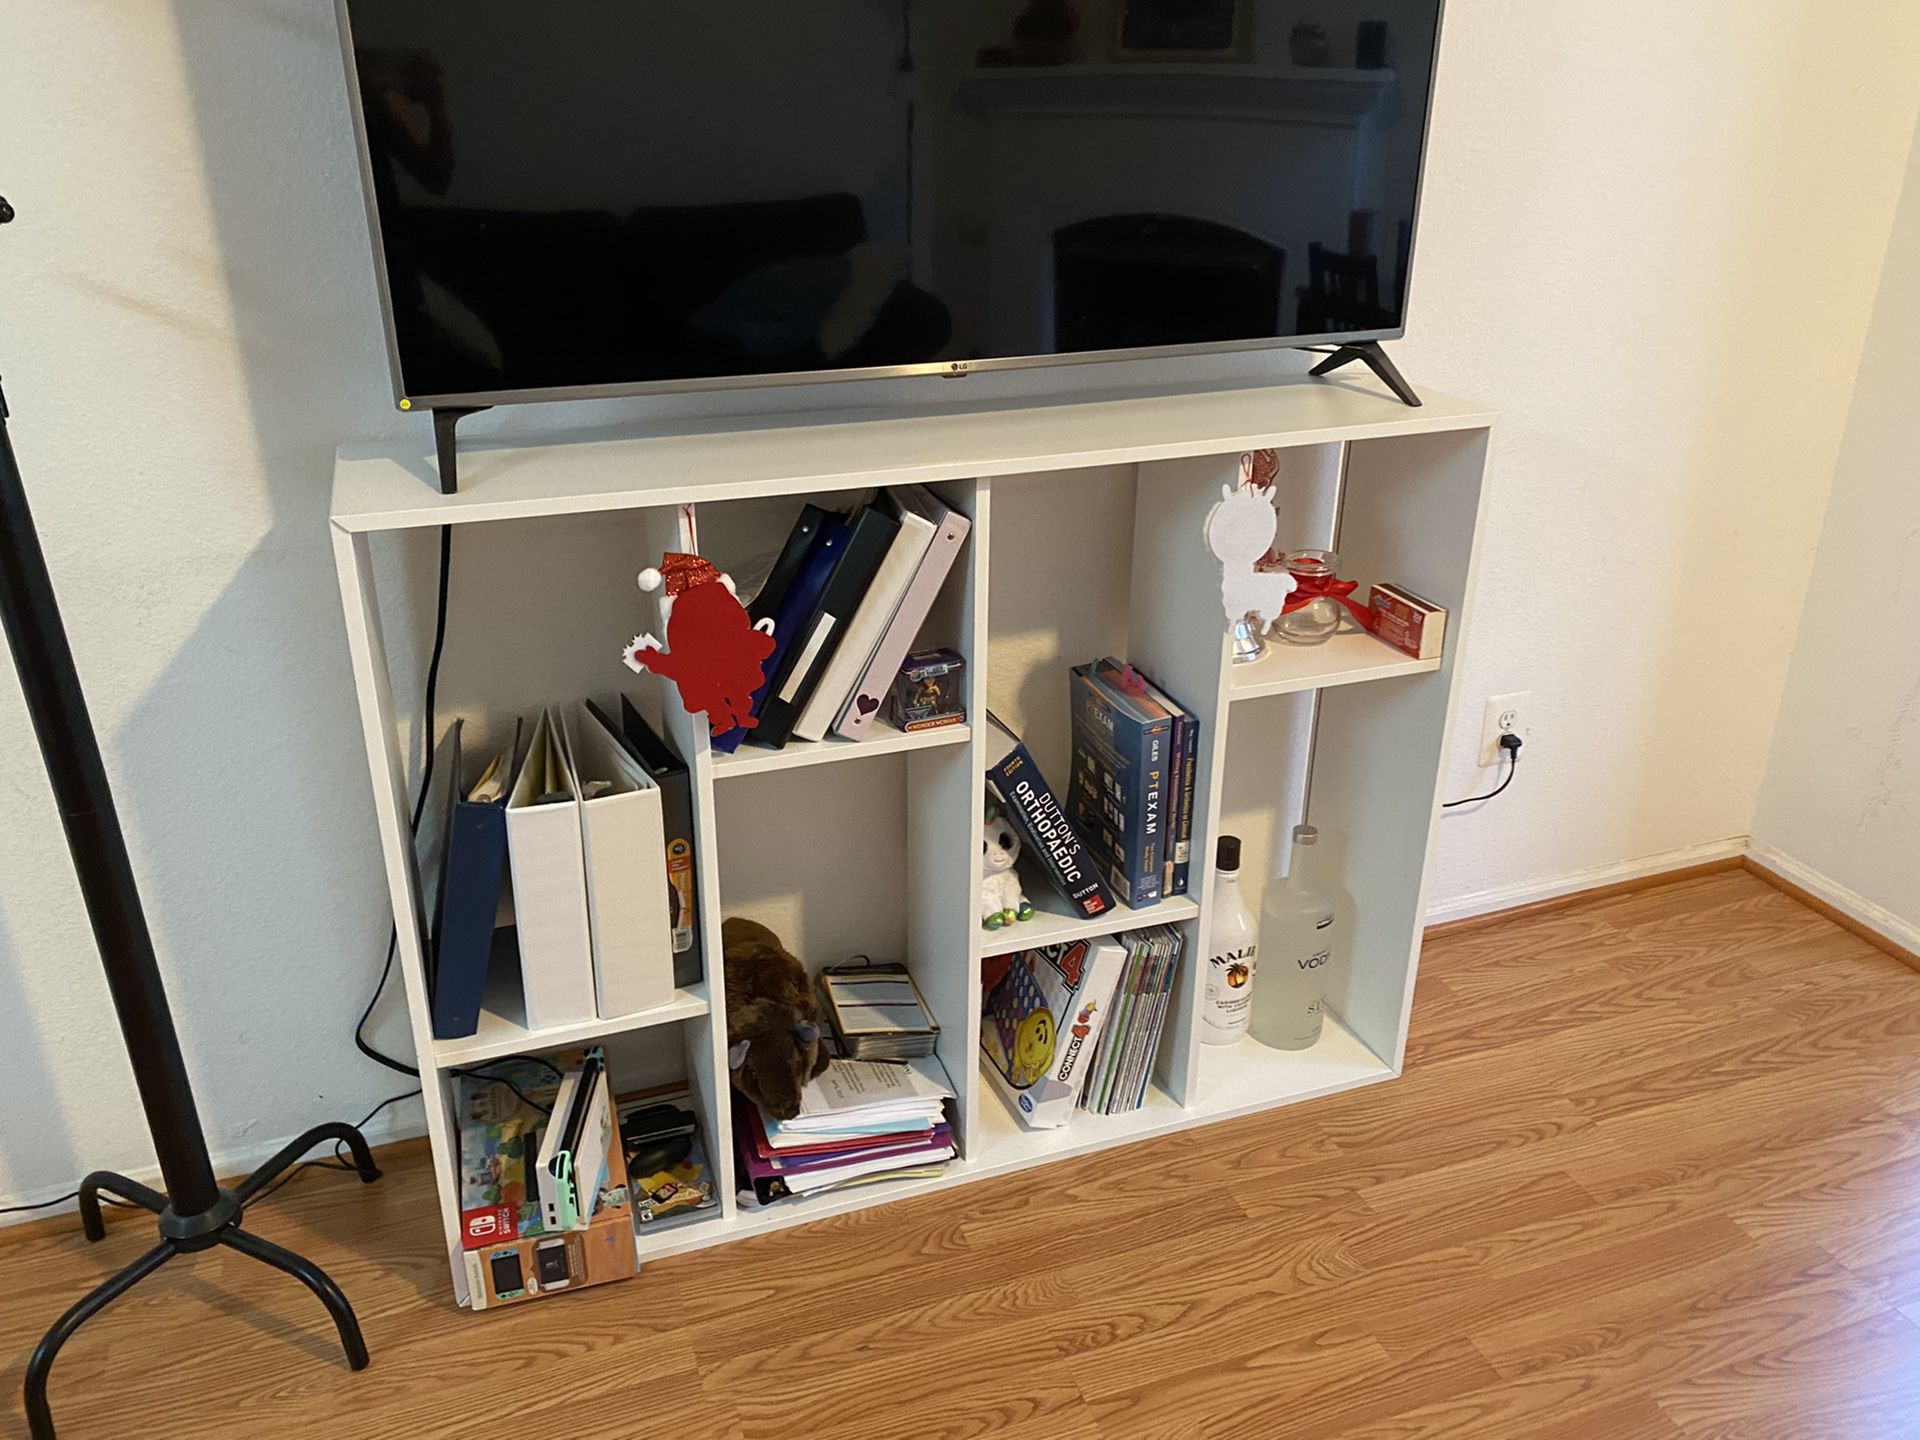 Book Shelf/ TV stand